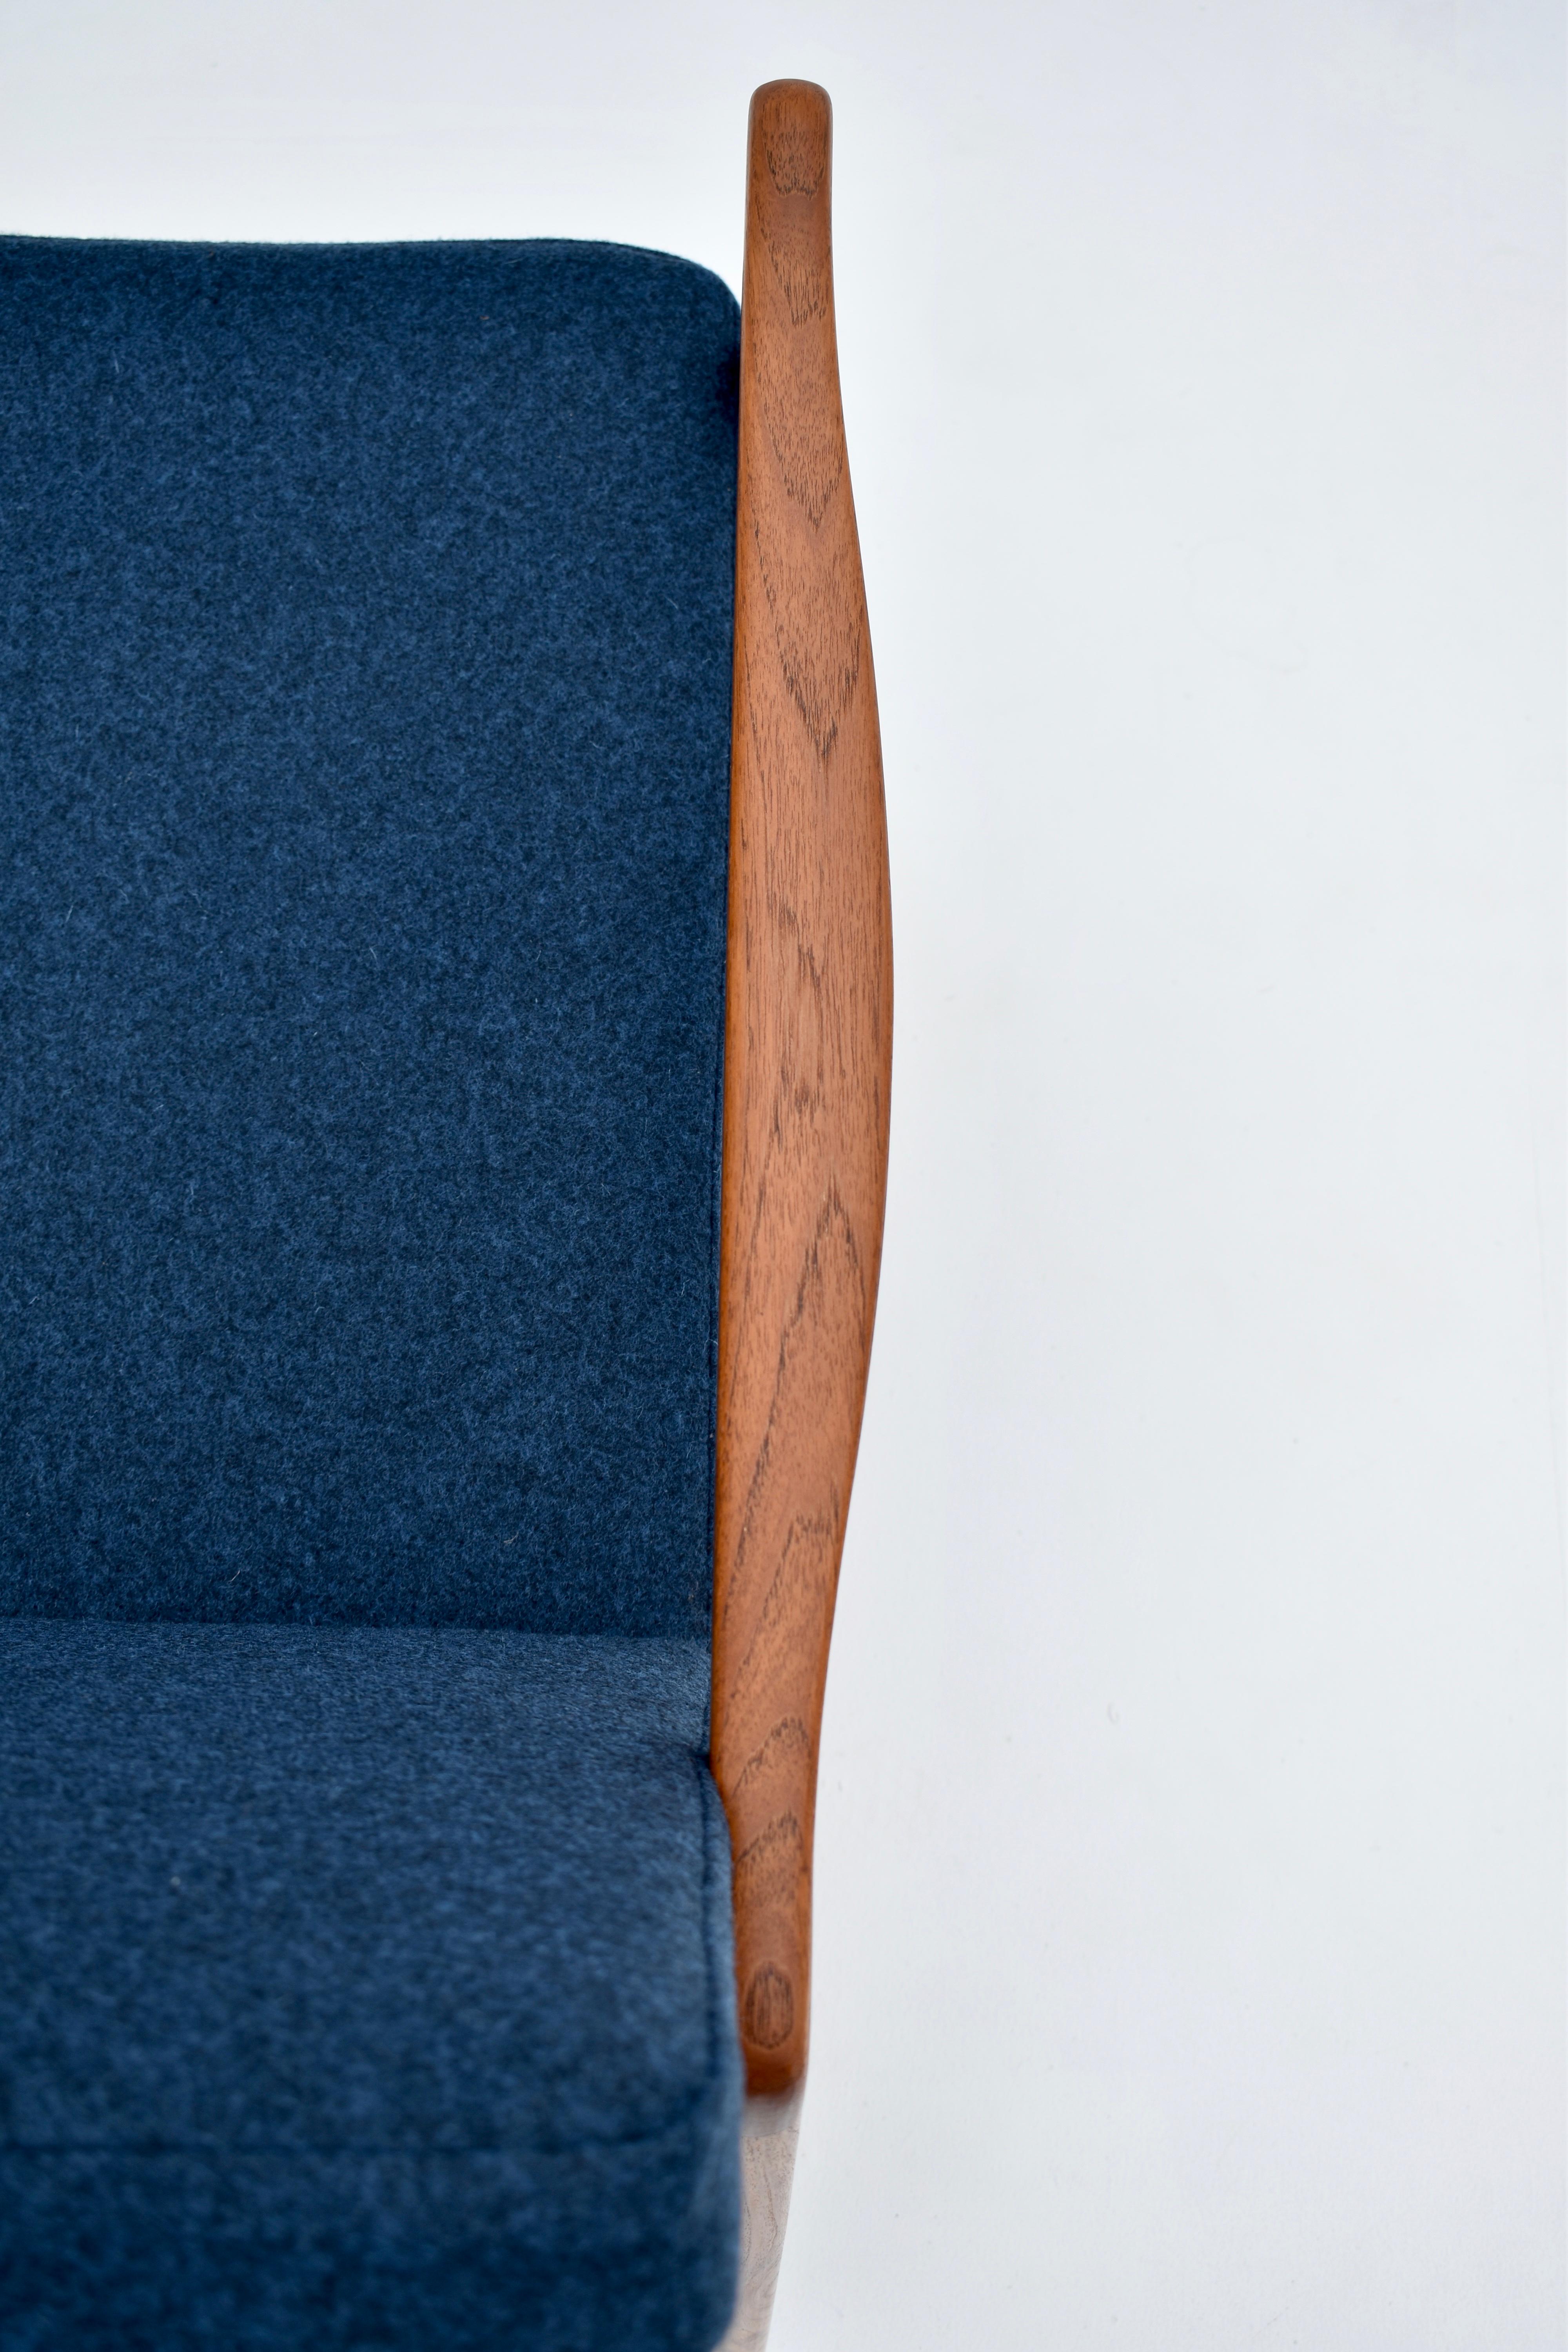 Ole Wanscher Model 120 Teak Rocking Lounge Chair for France & Son 4